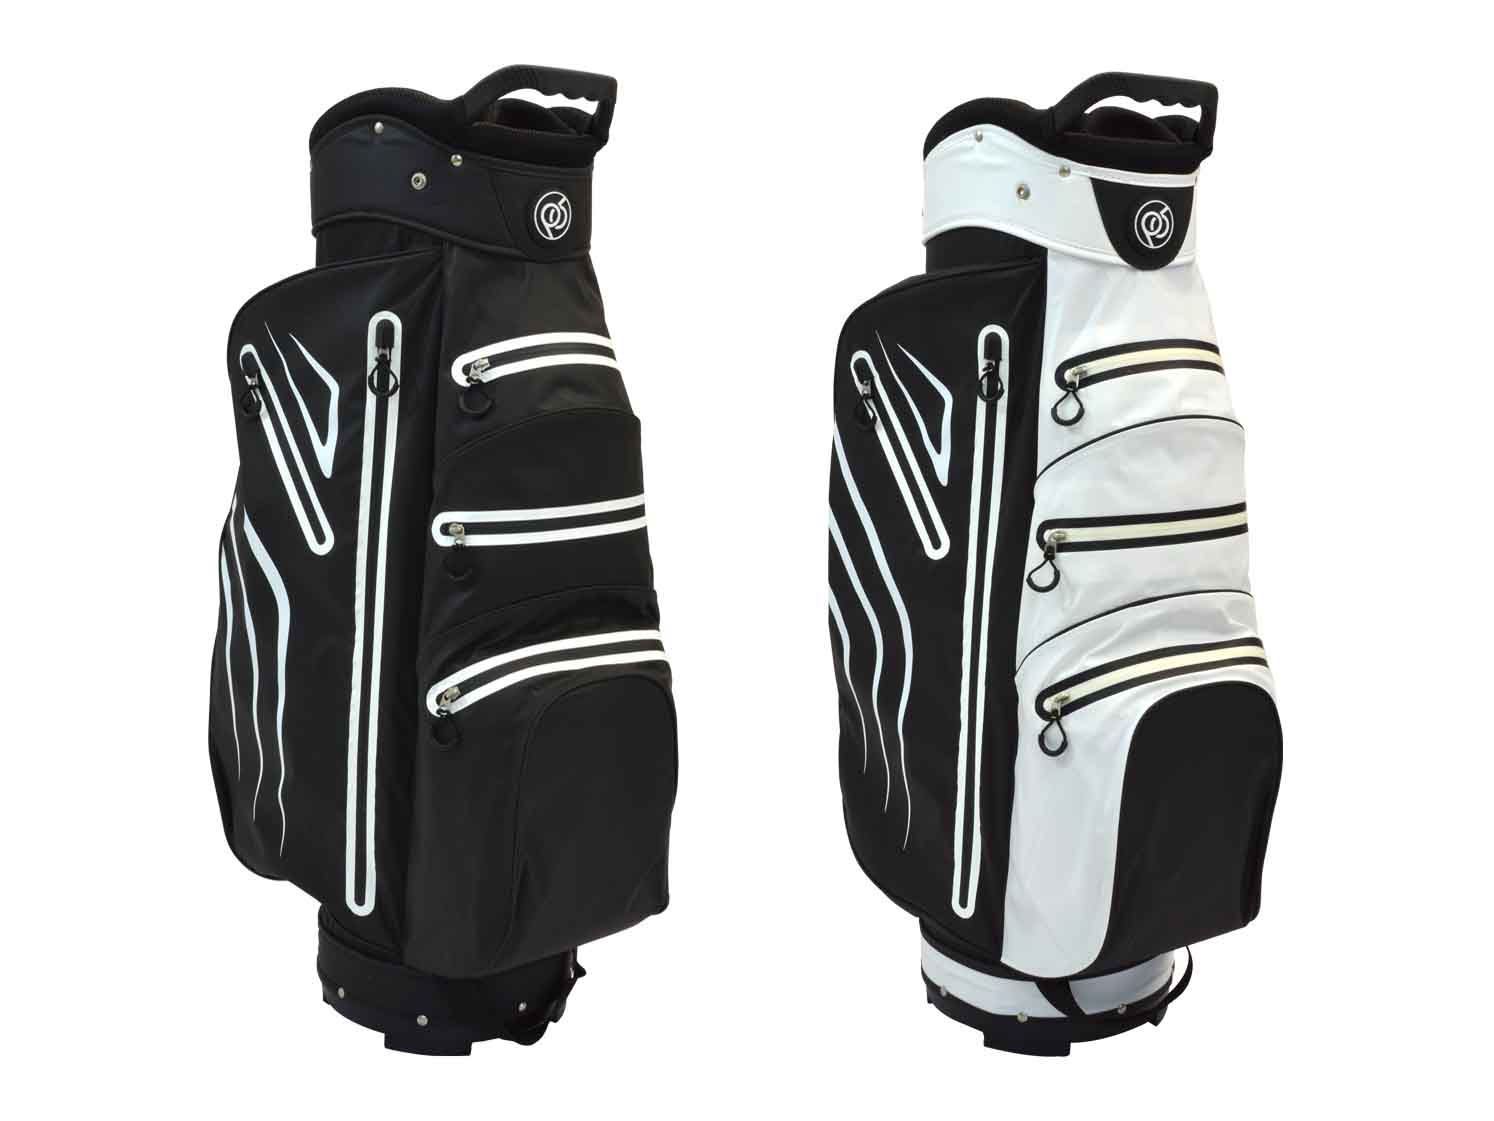 | waterproof Golf unveiled Monthly Powerbug bag cart